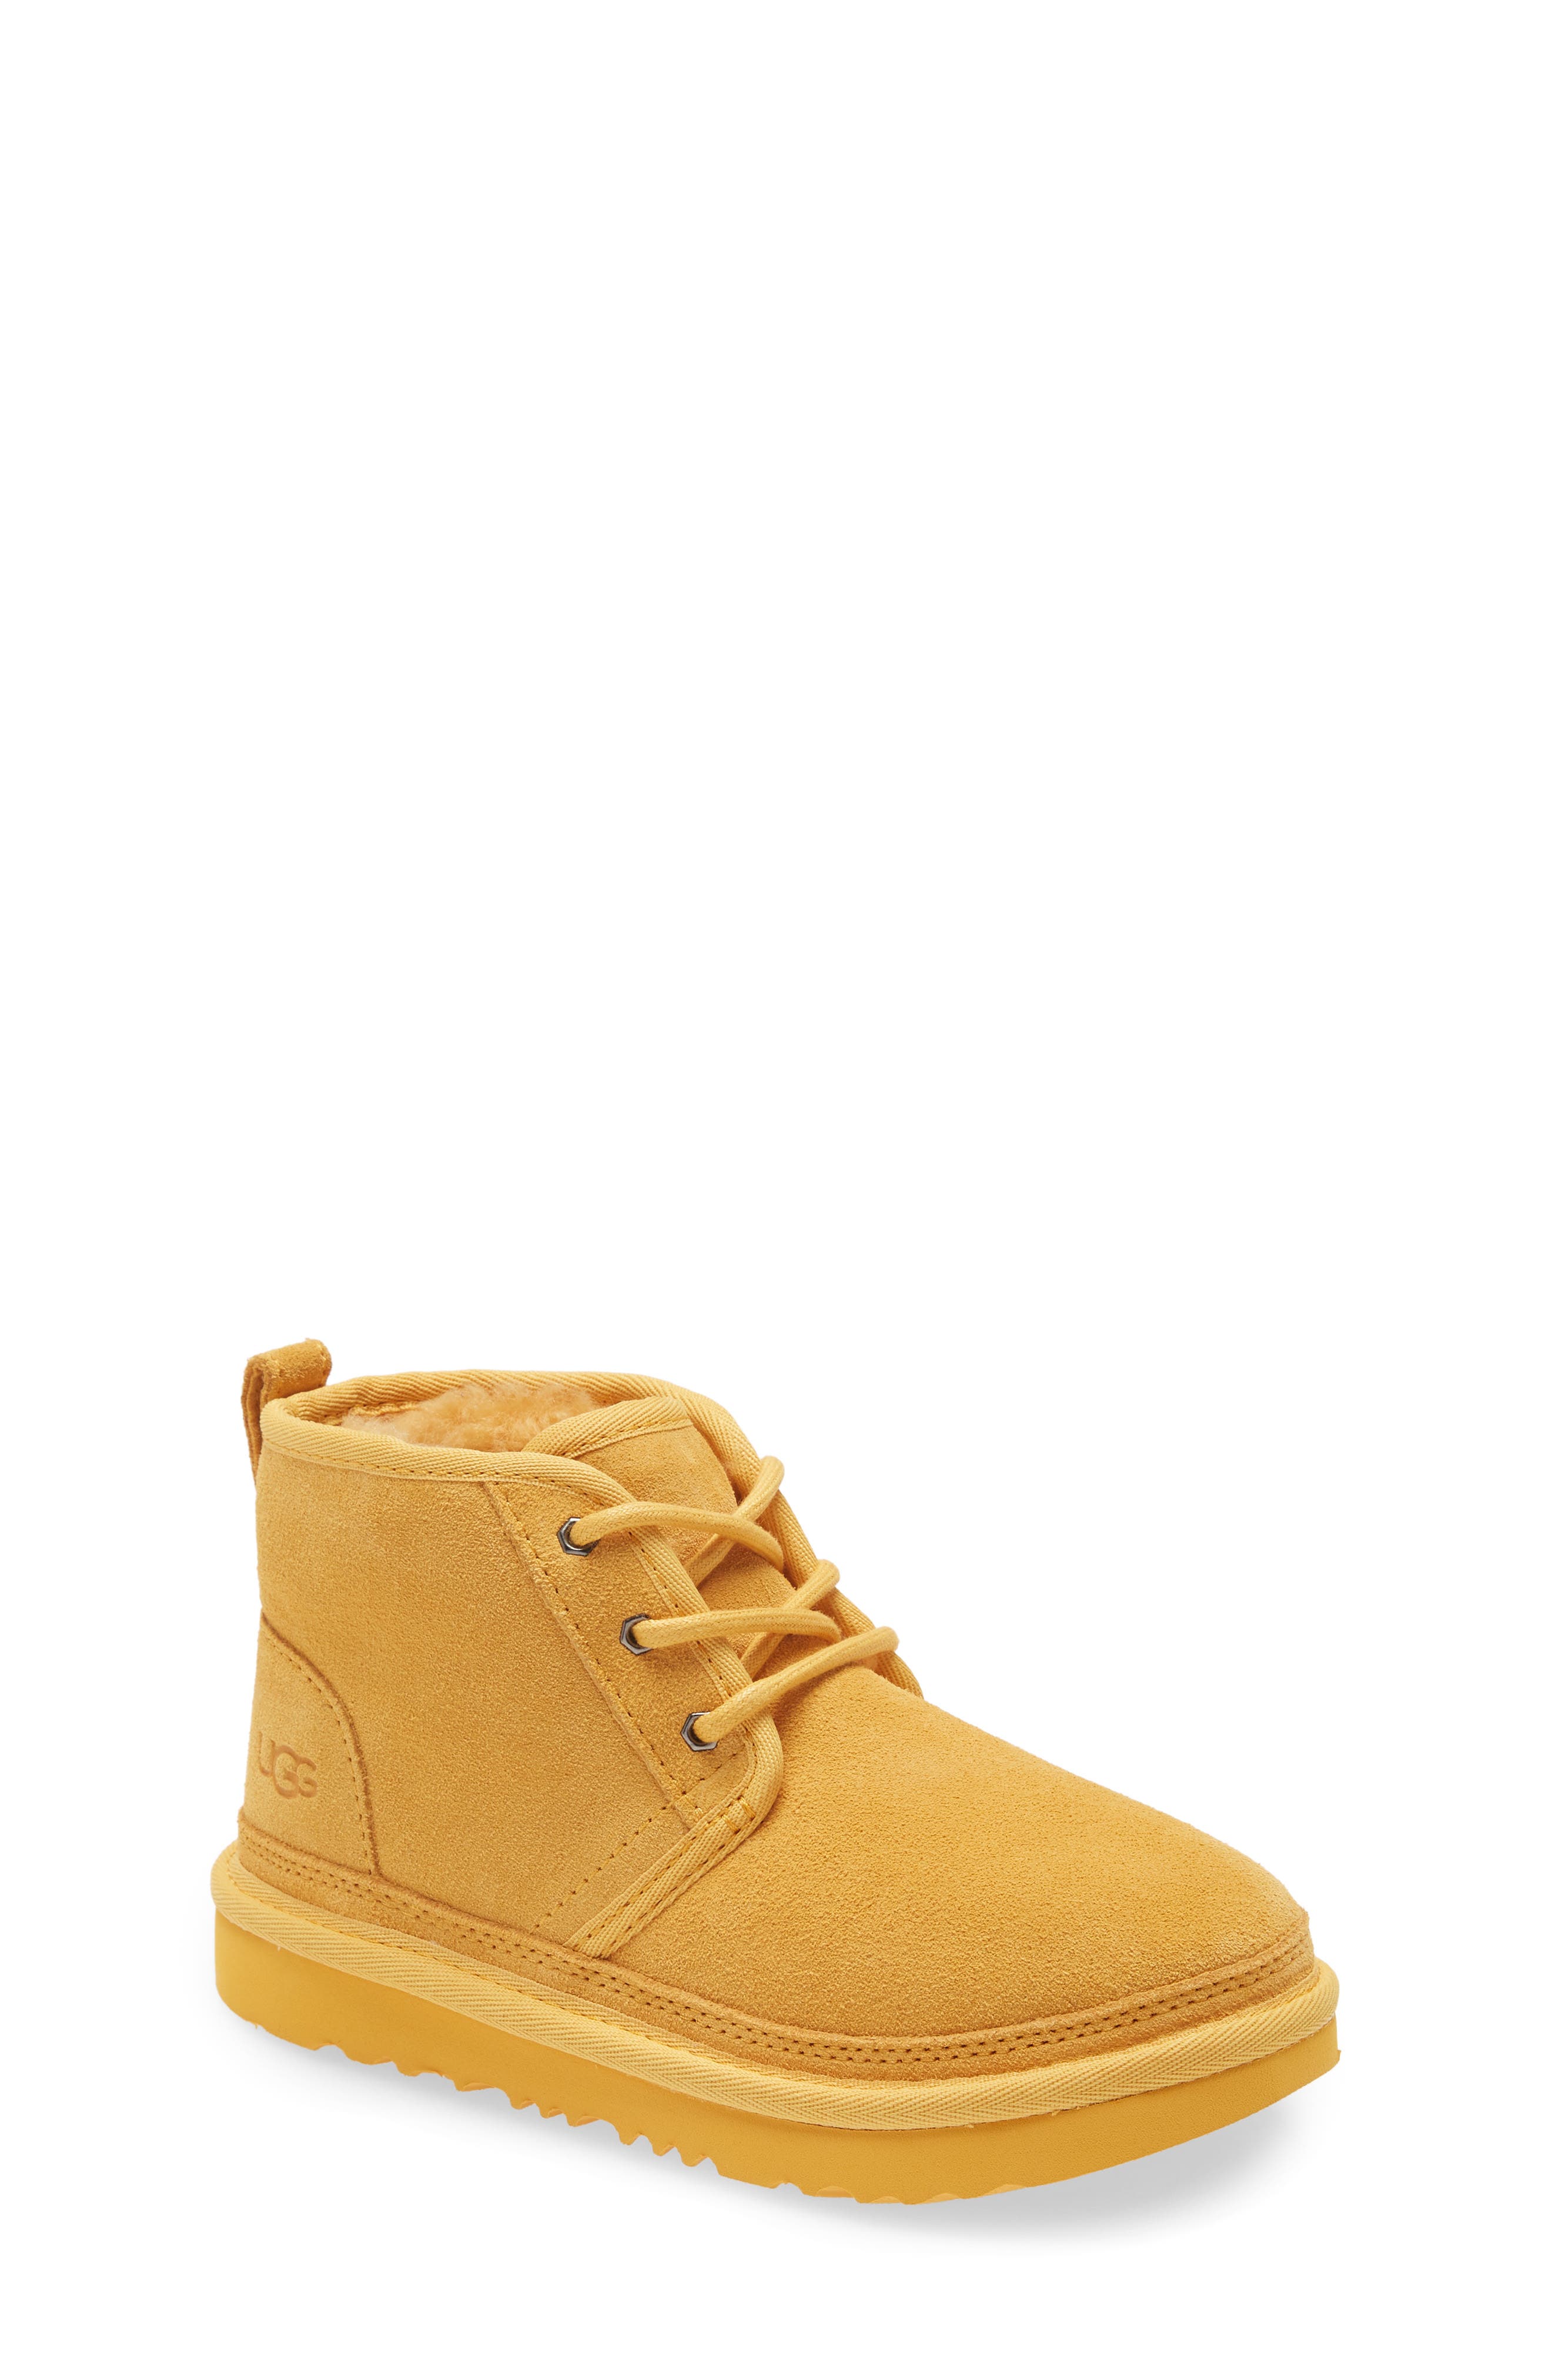 yellow ugg boots